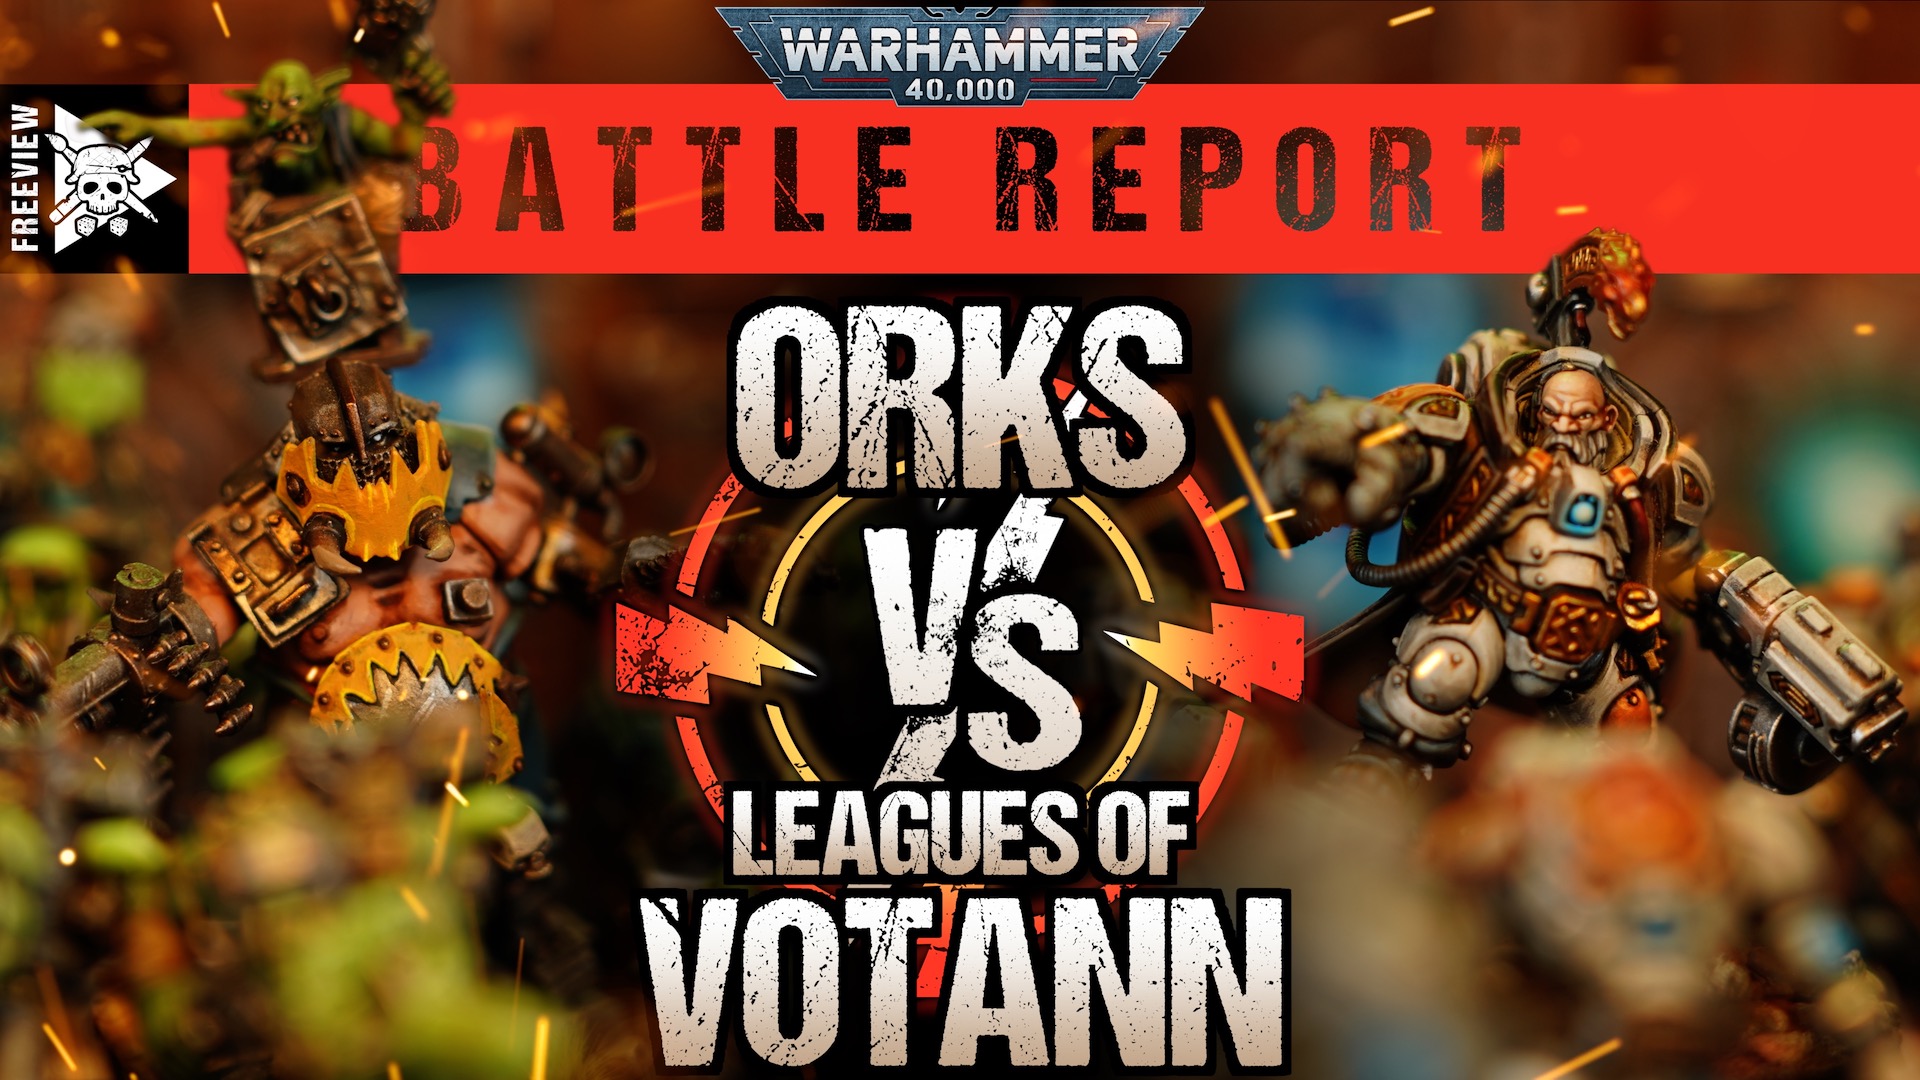 Orks vs Space Marines, Warhammer 40k battle report 